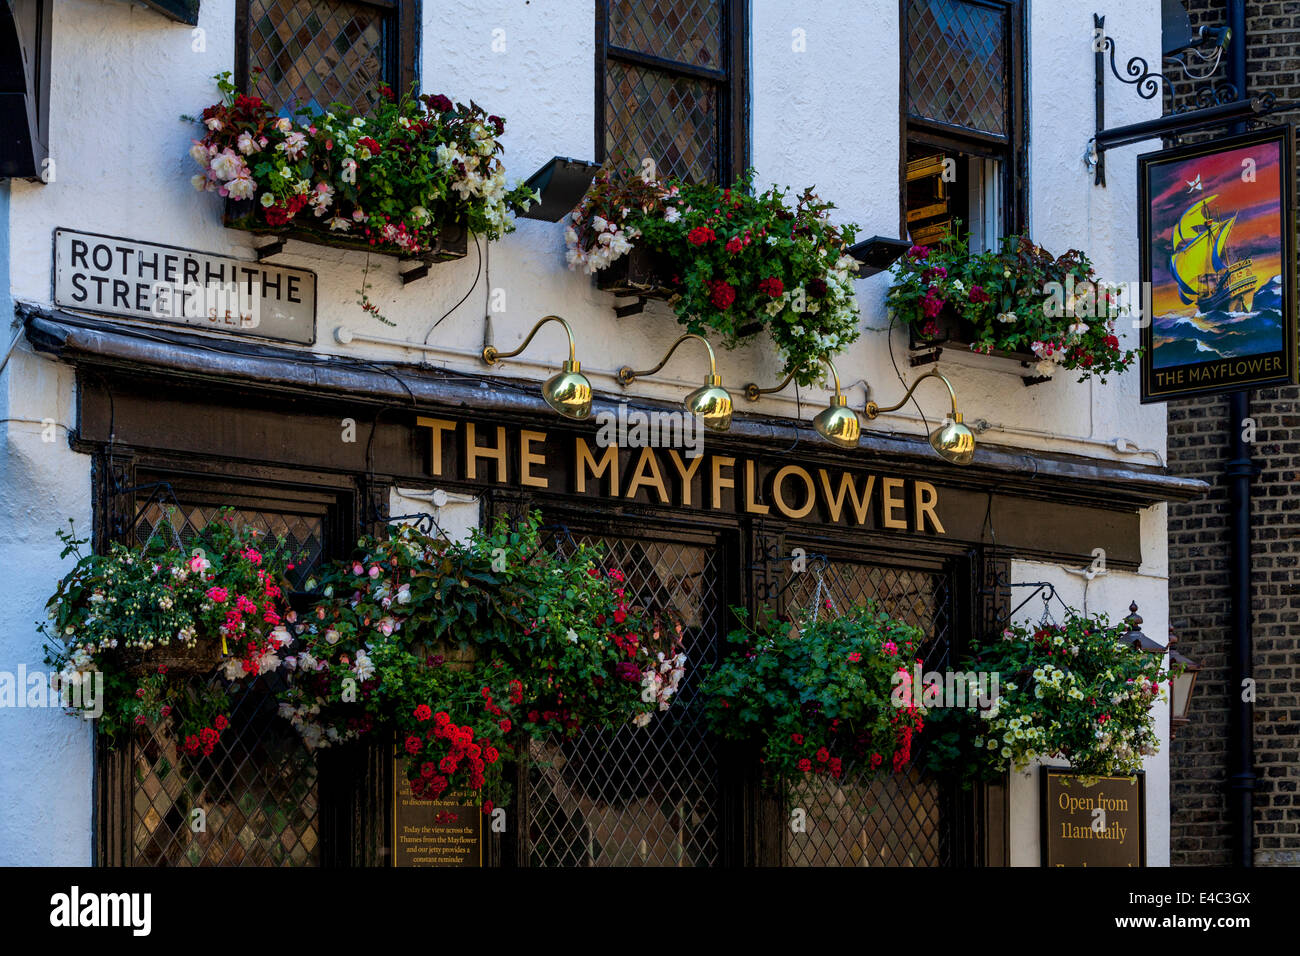 The Mayflower Public House, Rotherhithe, London, England Stock Photo